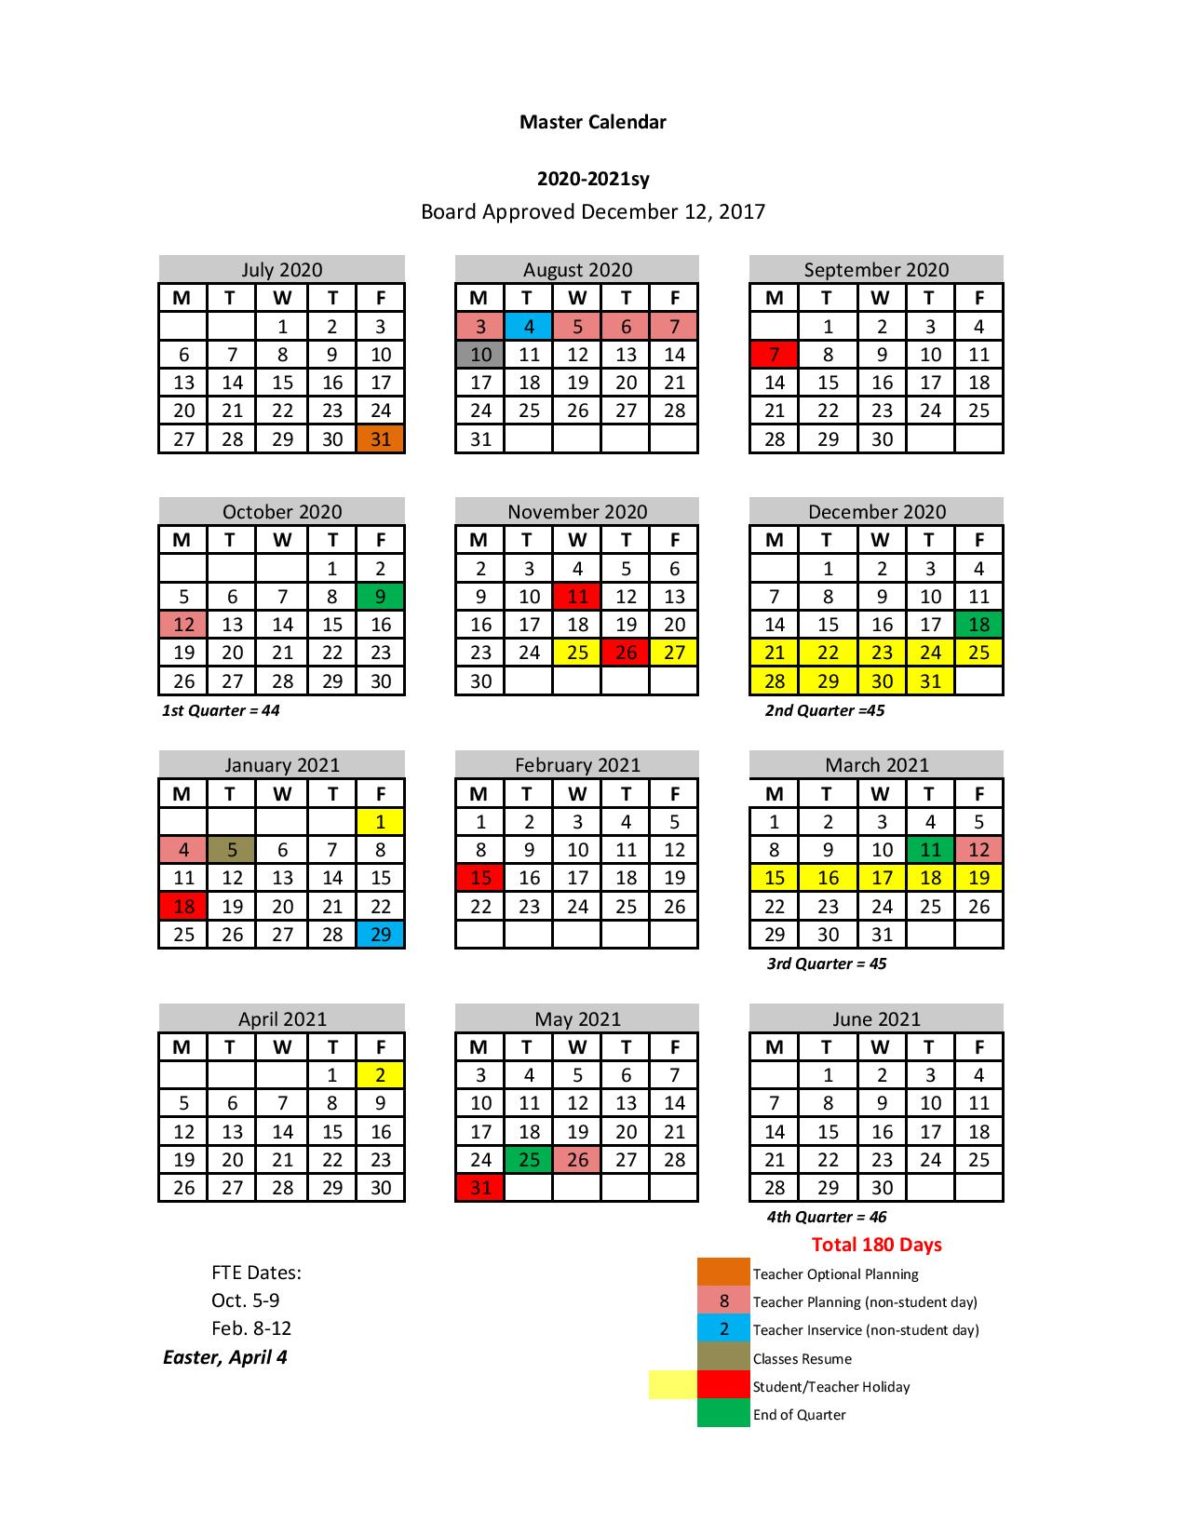 St Johns County School District Calendar 2020-2021